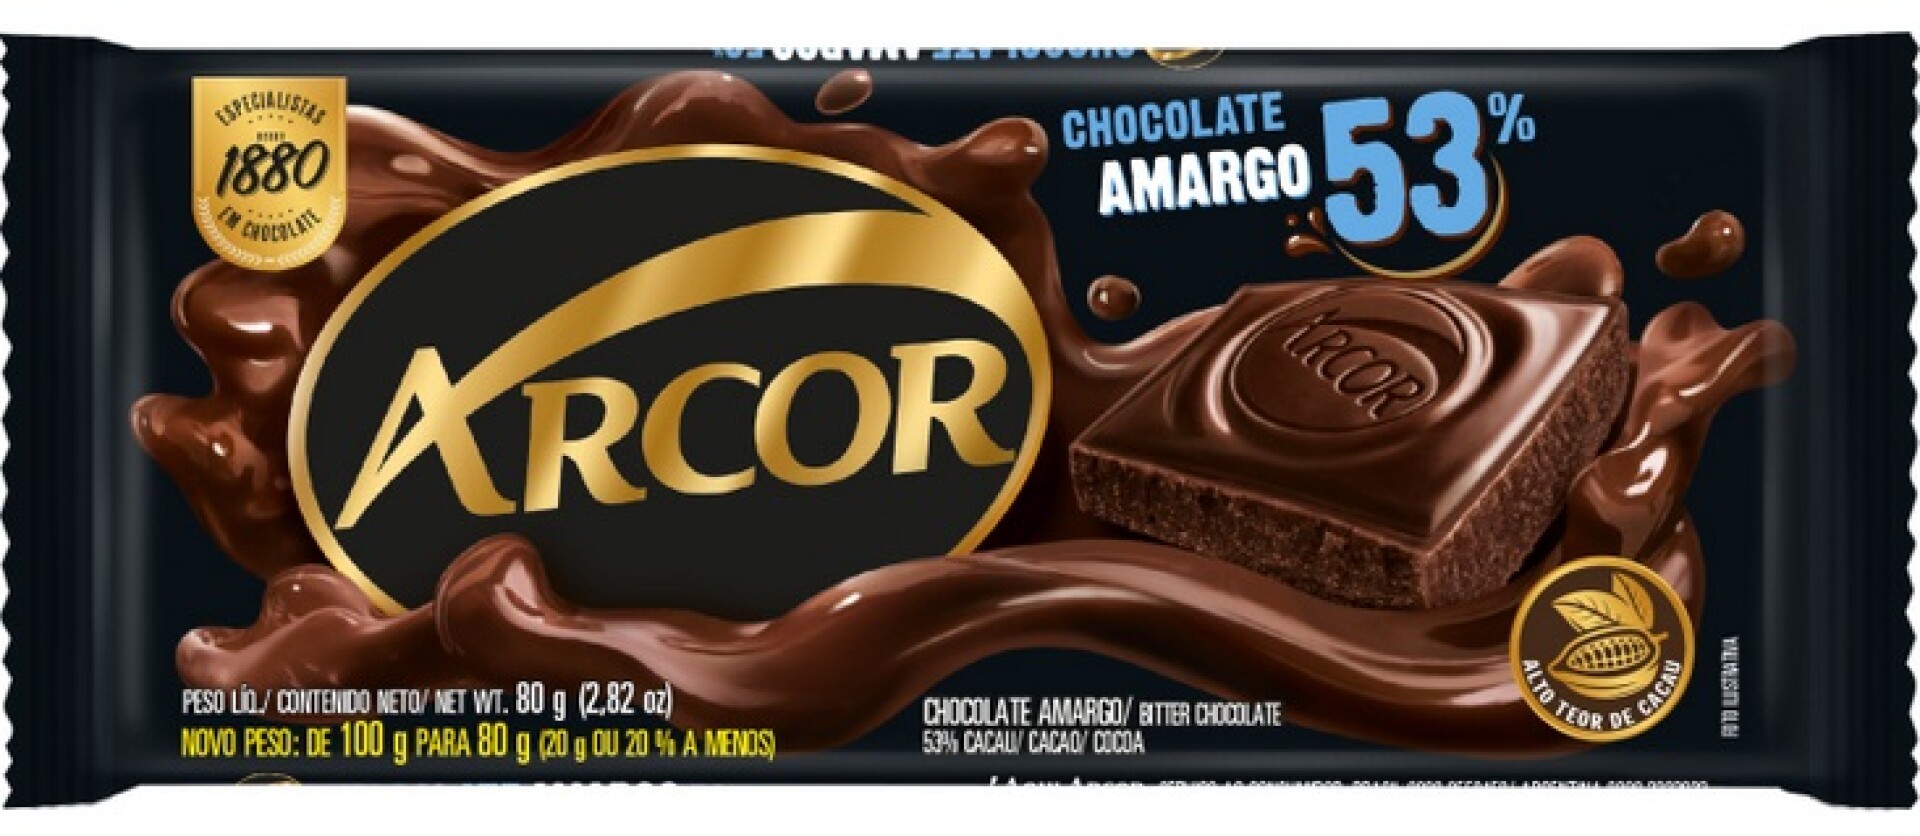 TABLETA CHOCOLATE ARCOR 80G AMARGO 53% 